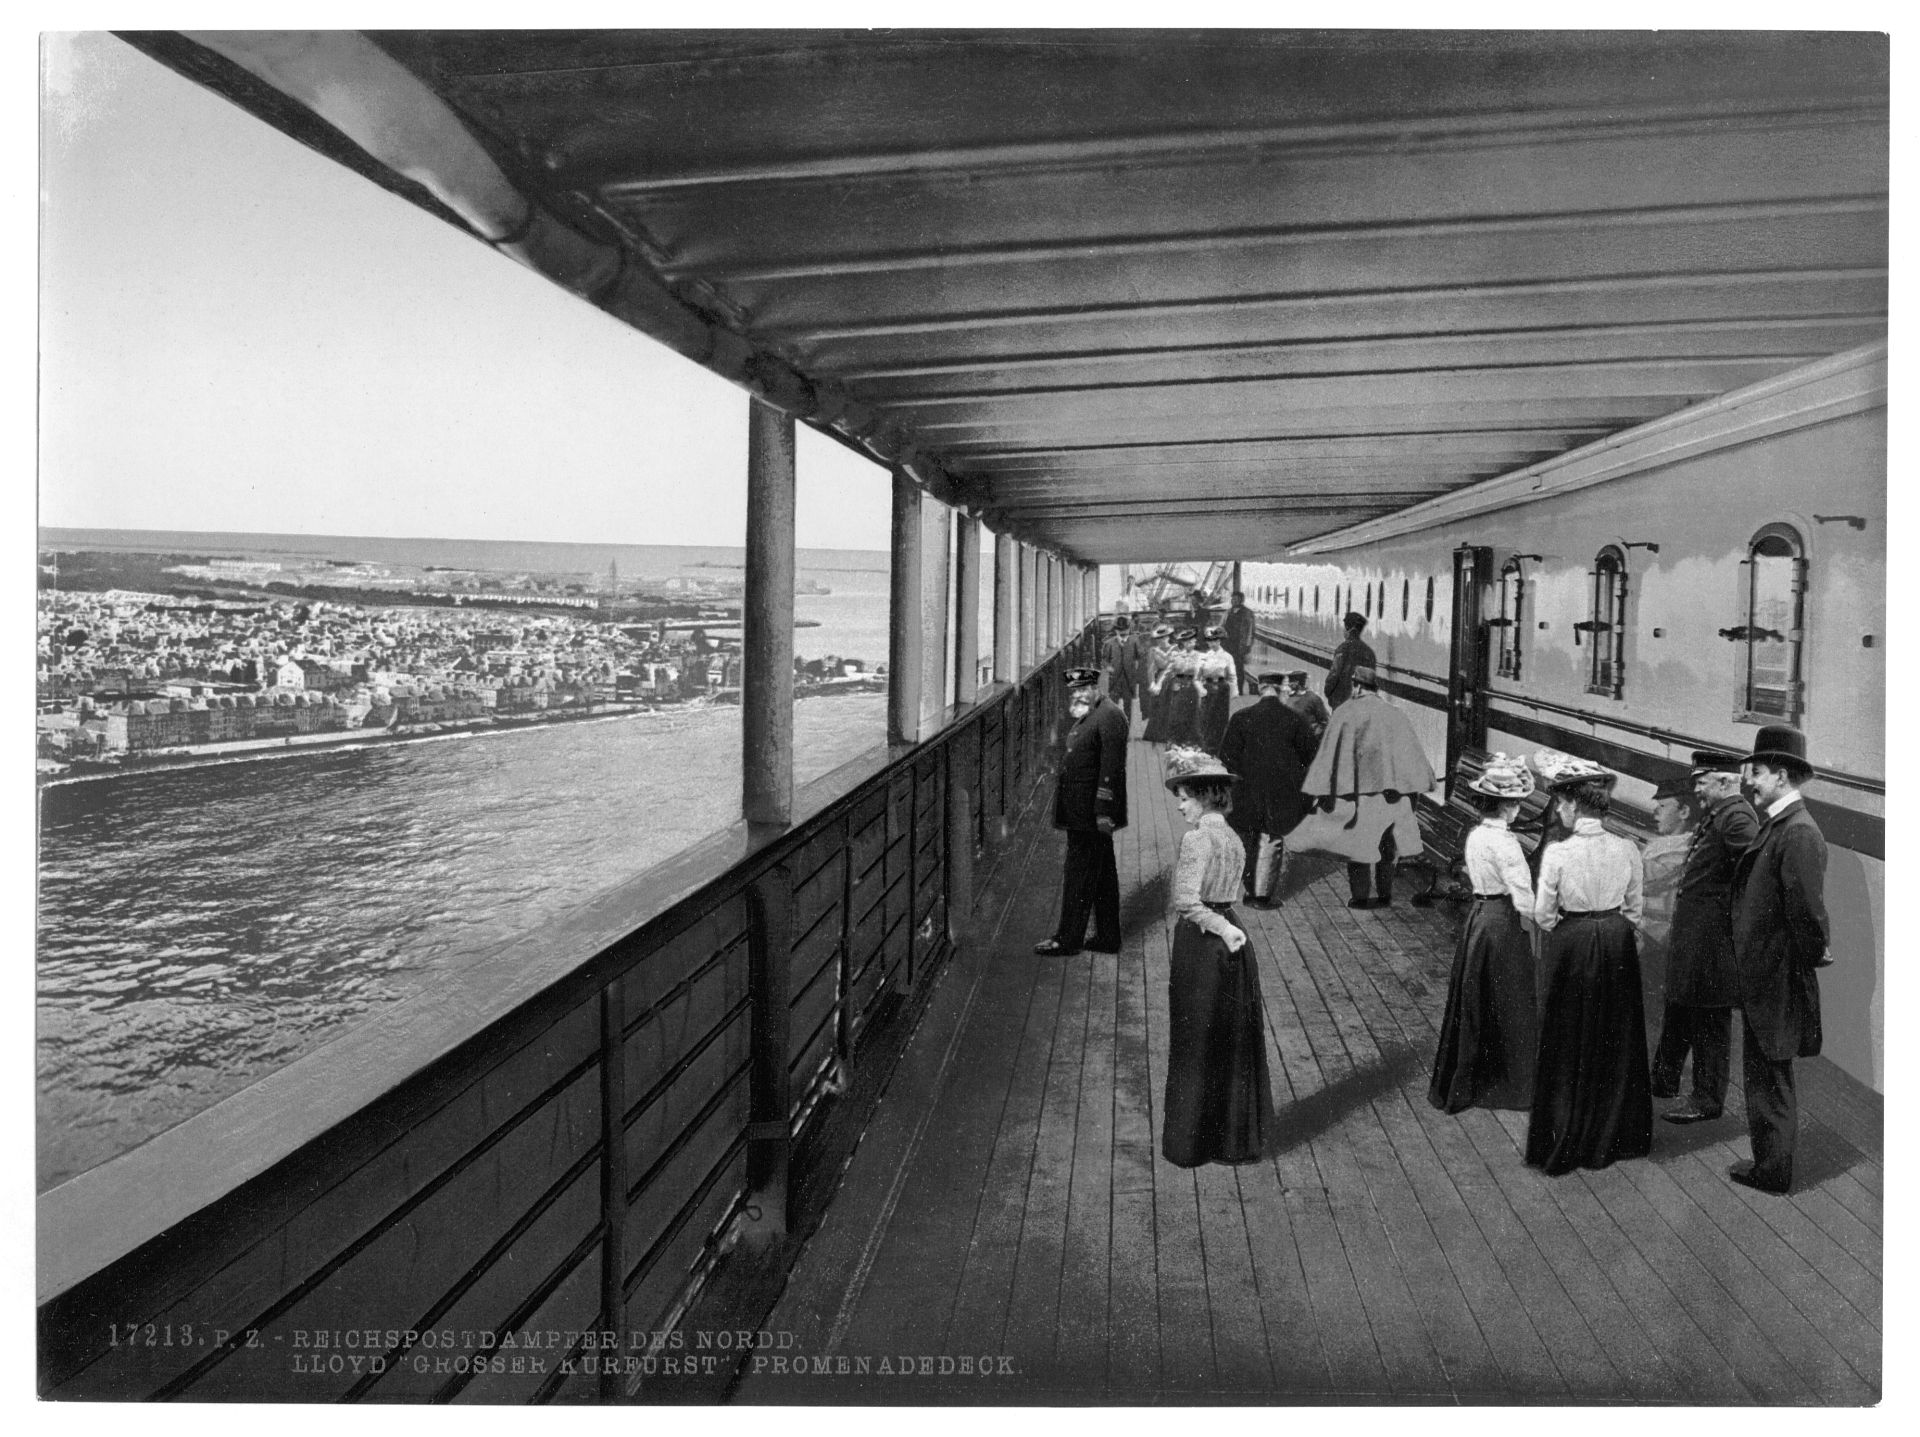 "Grosser Kurfurst," Promenade Deck, North German Lloyd, Royal Mail Steamers